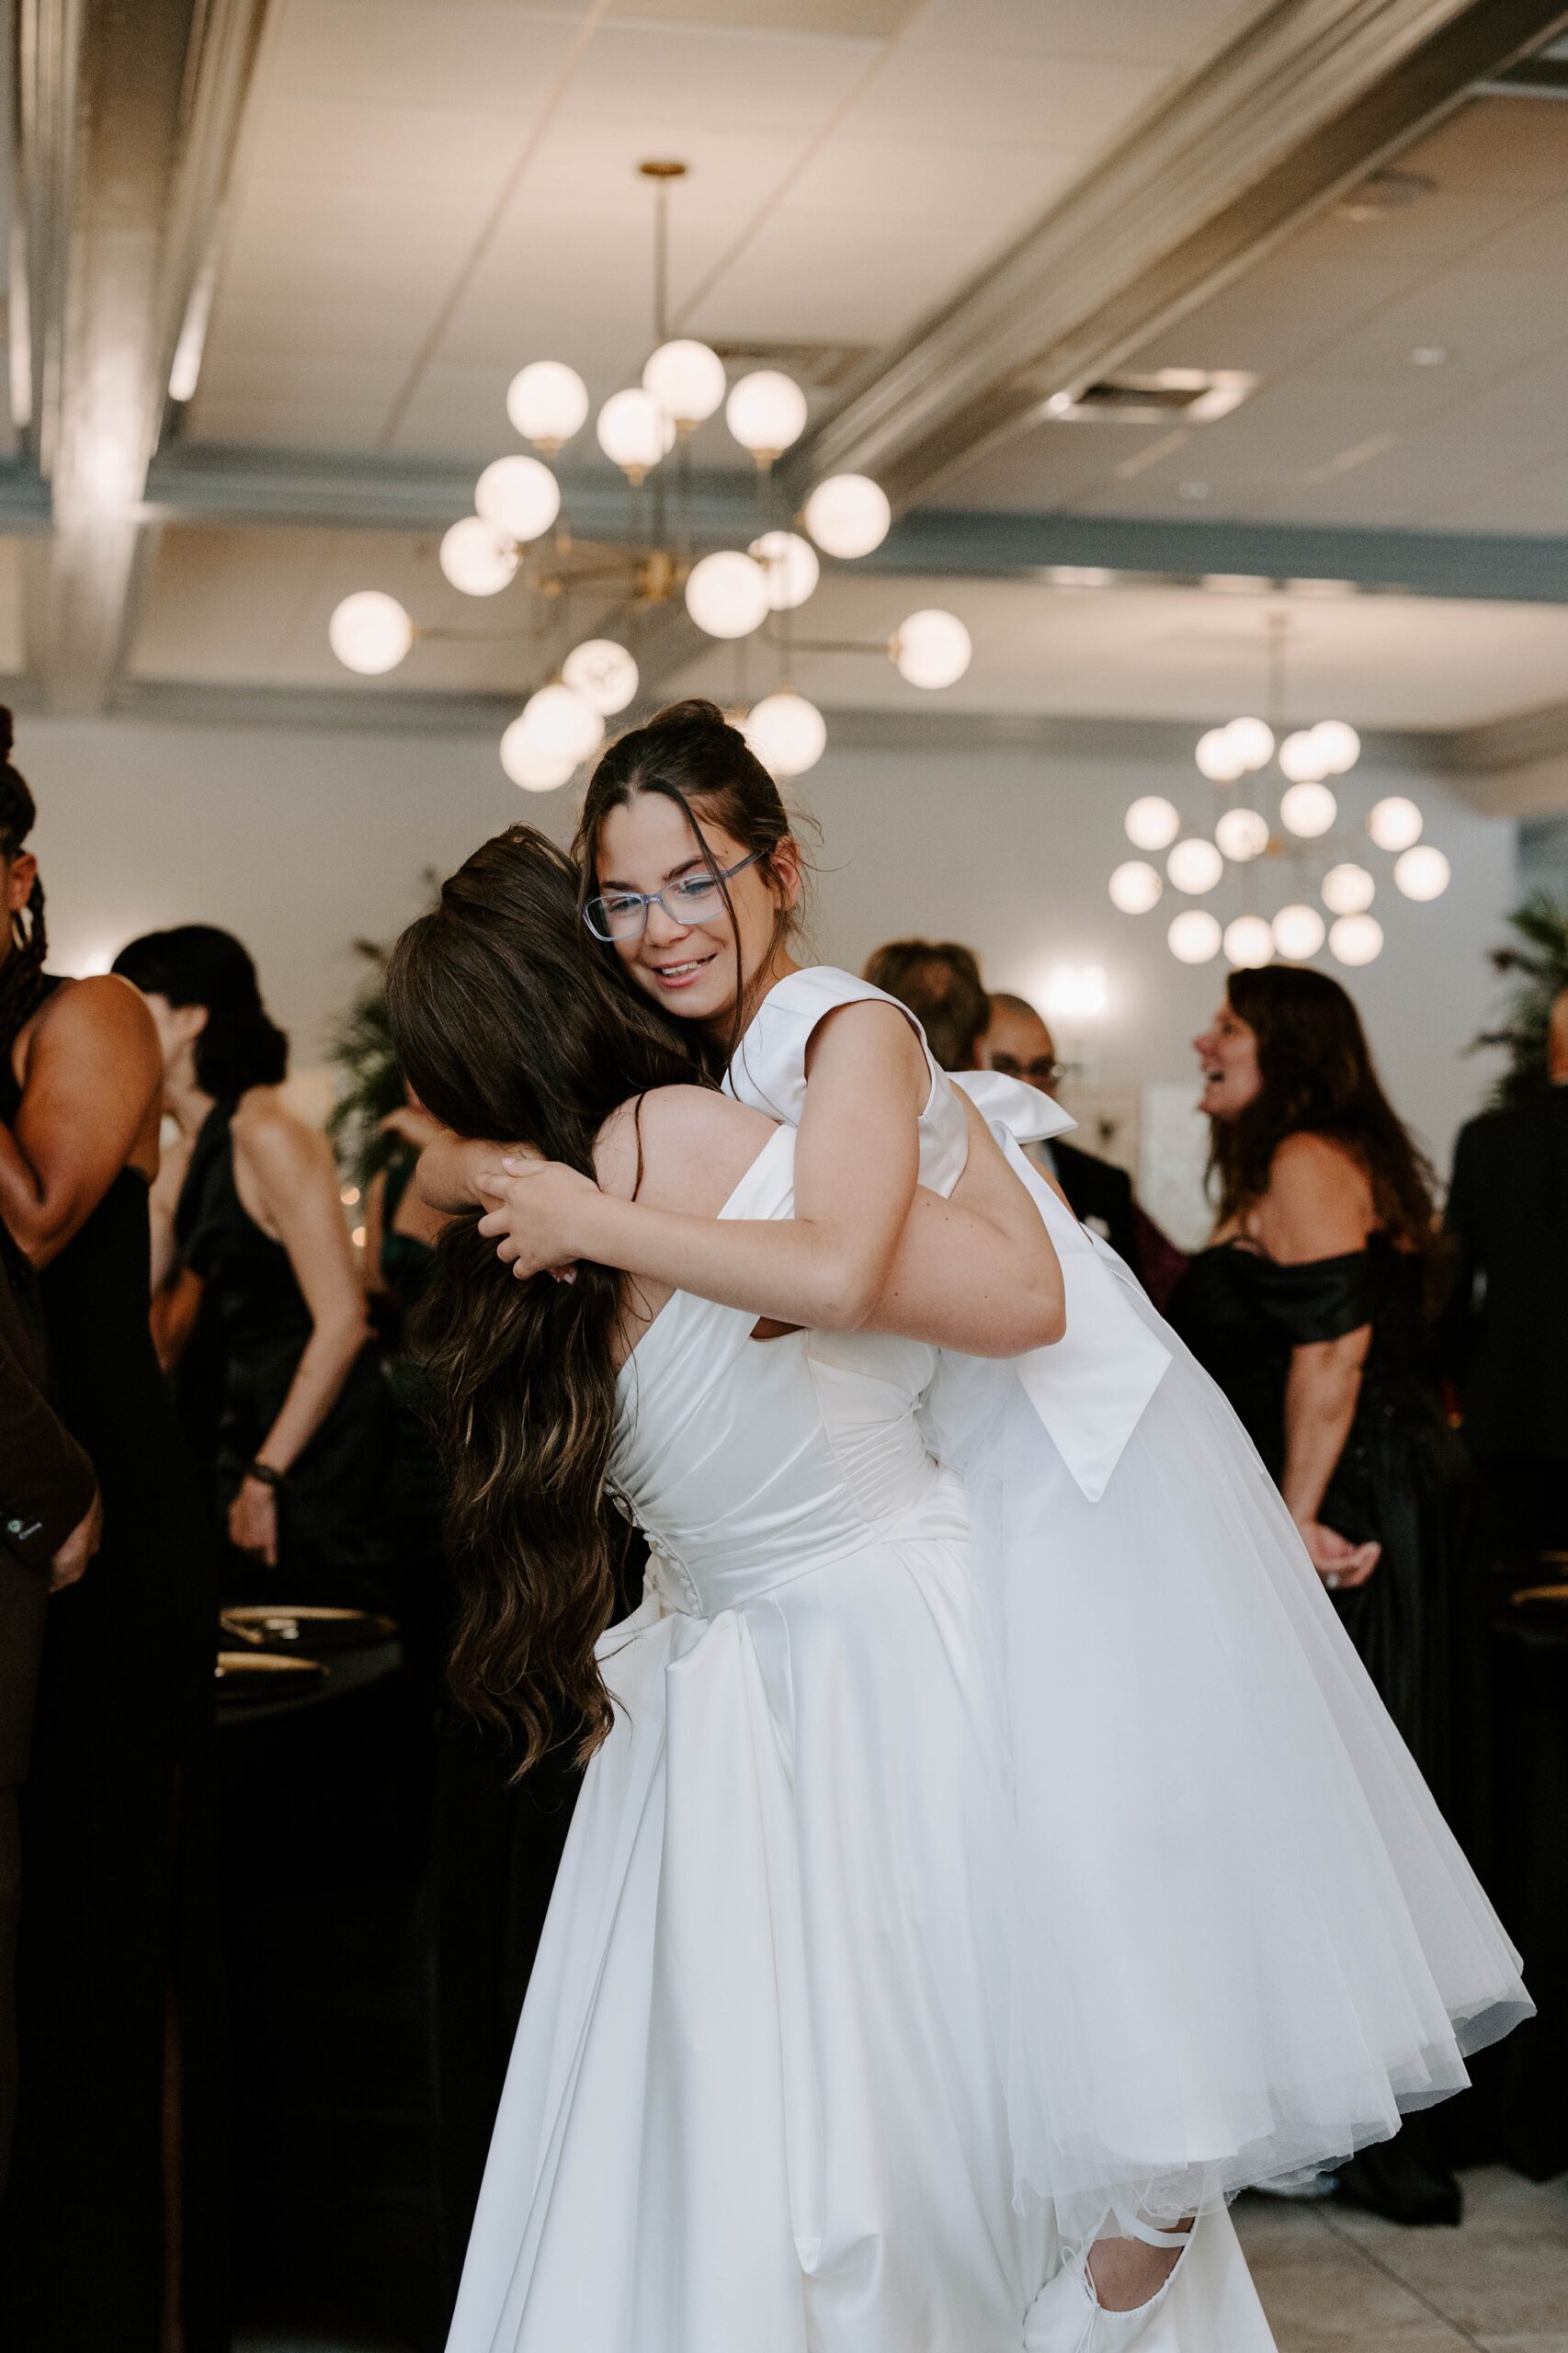 Bride and flower girl hug at wedding reception